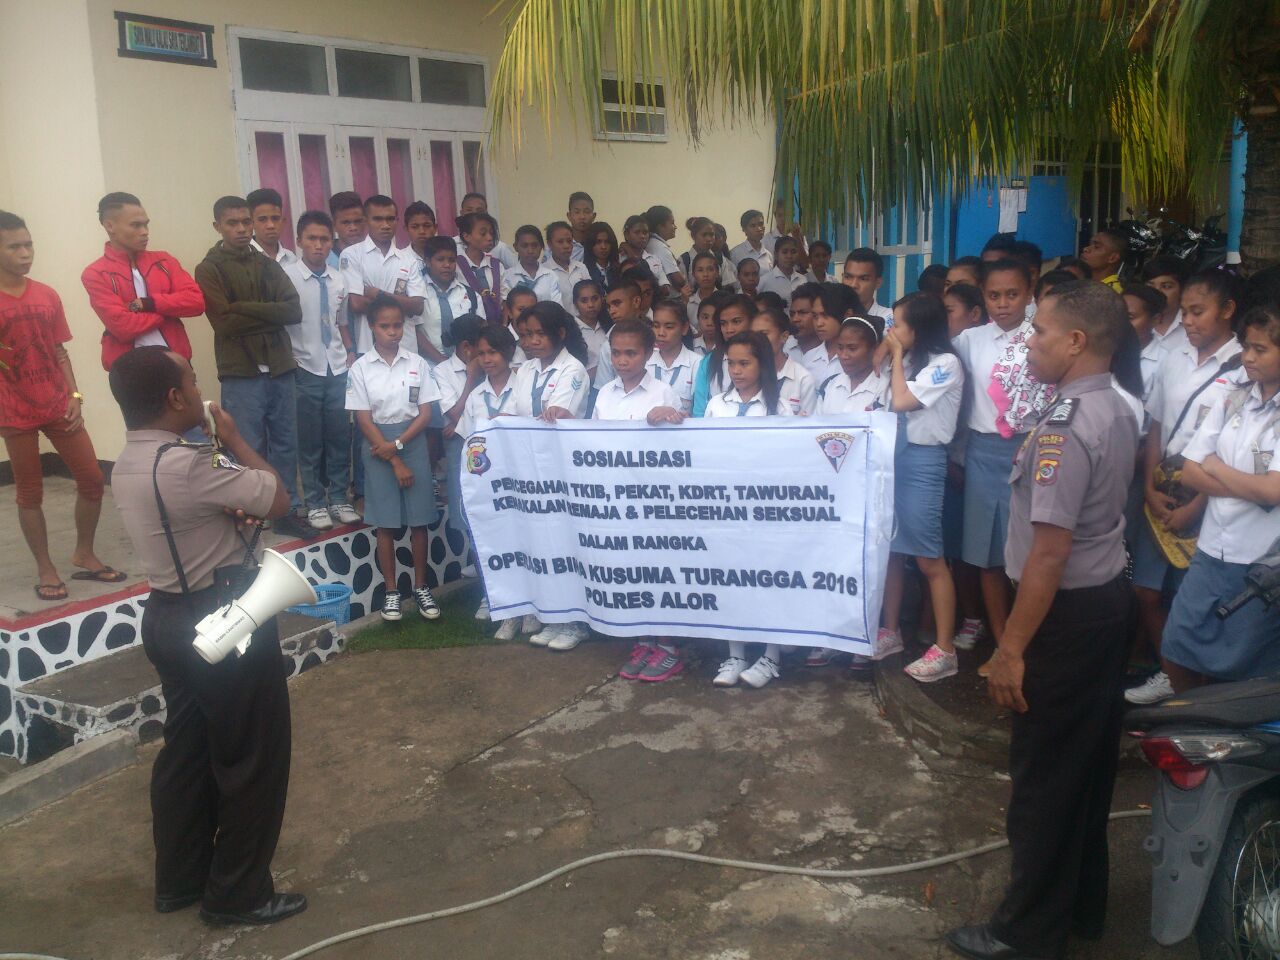 Dalam Rangka Operasi Bina Kusuma Kepolisian Resor Alor Lakukan Sosialisasi Di Sekolah-Sekolah